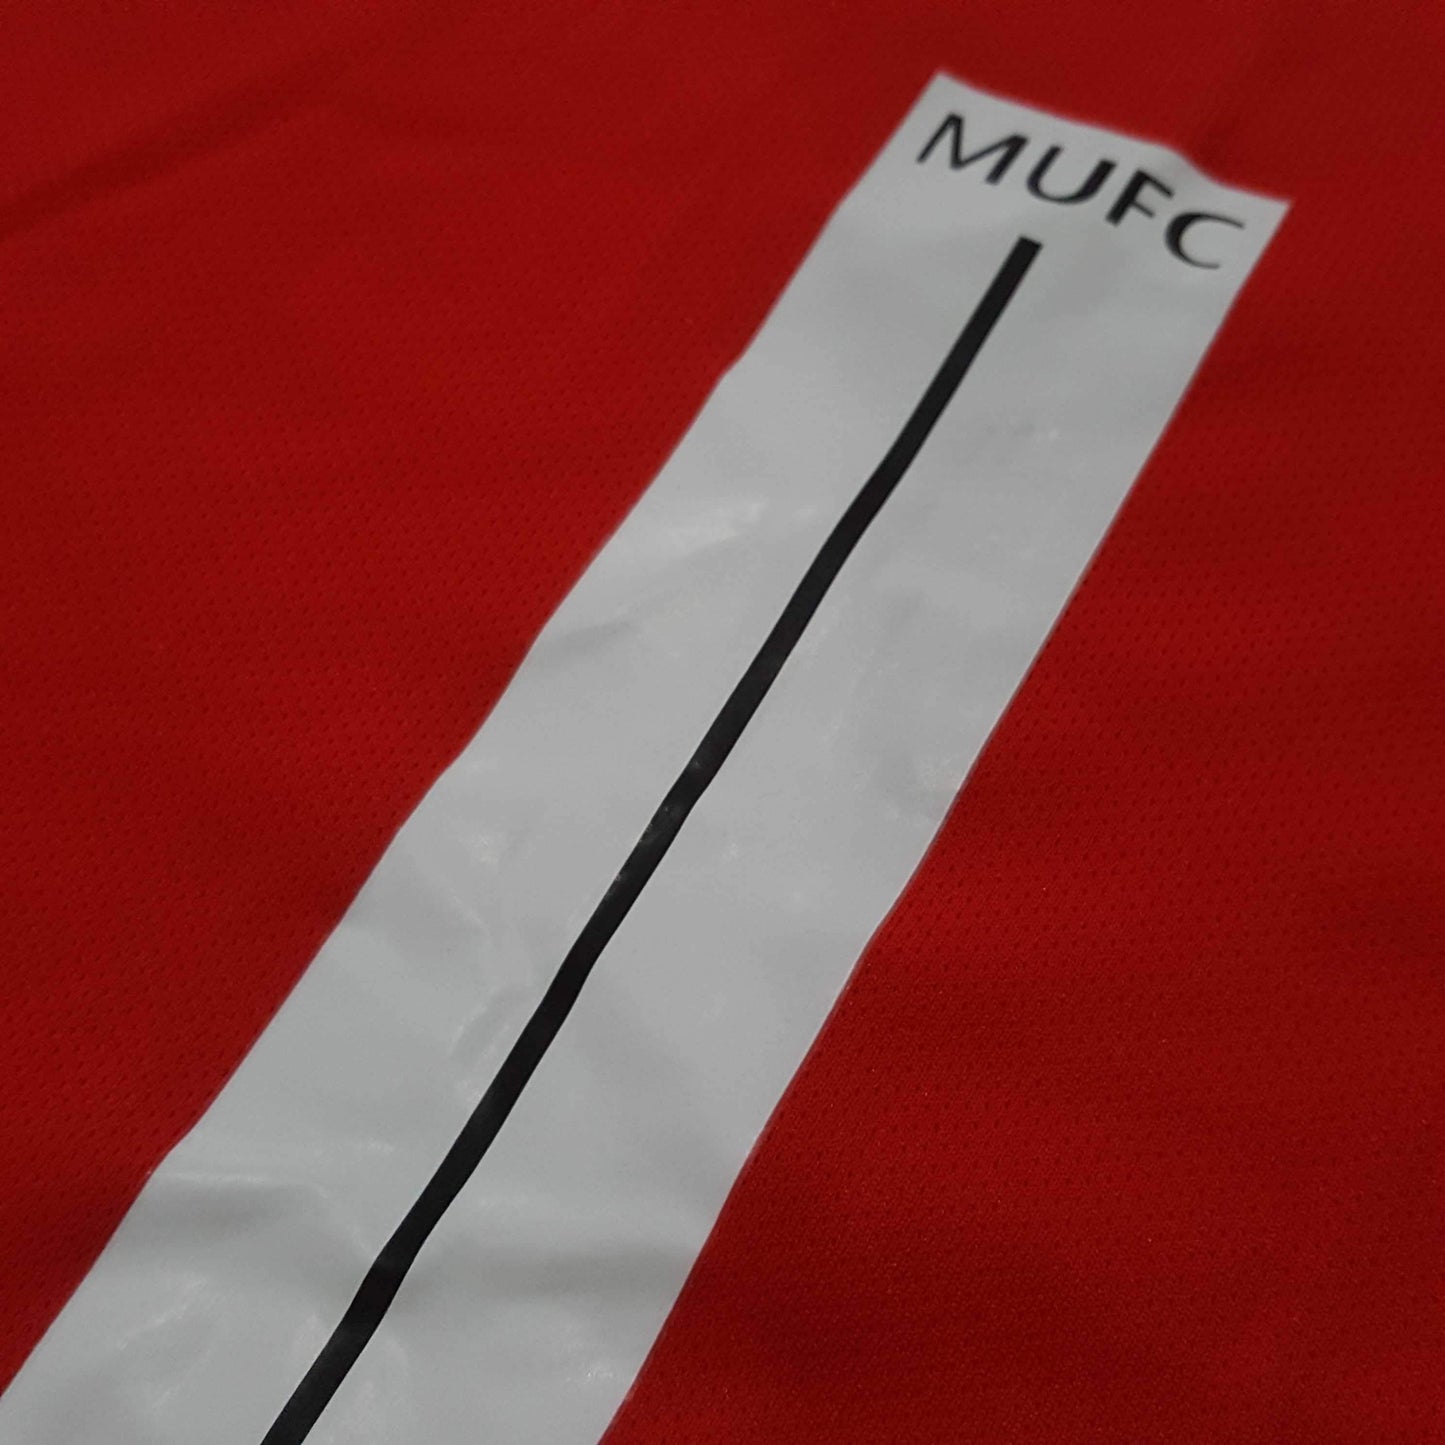 2007/08 Manchester United Home Shirt - ClassicFootballJersey